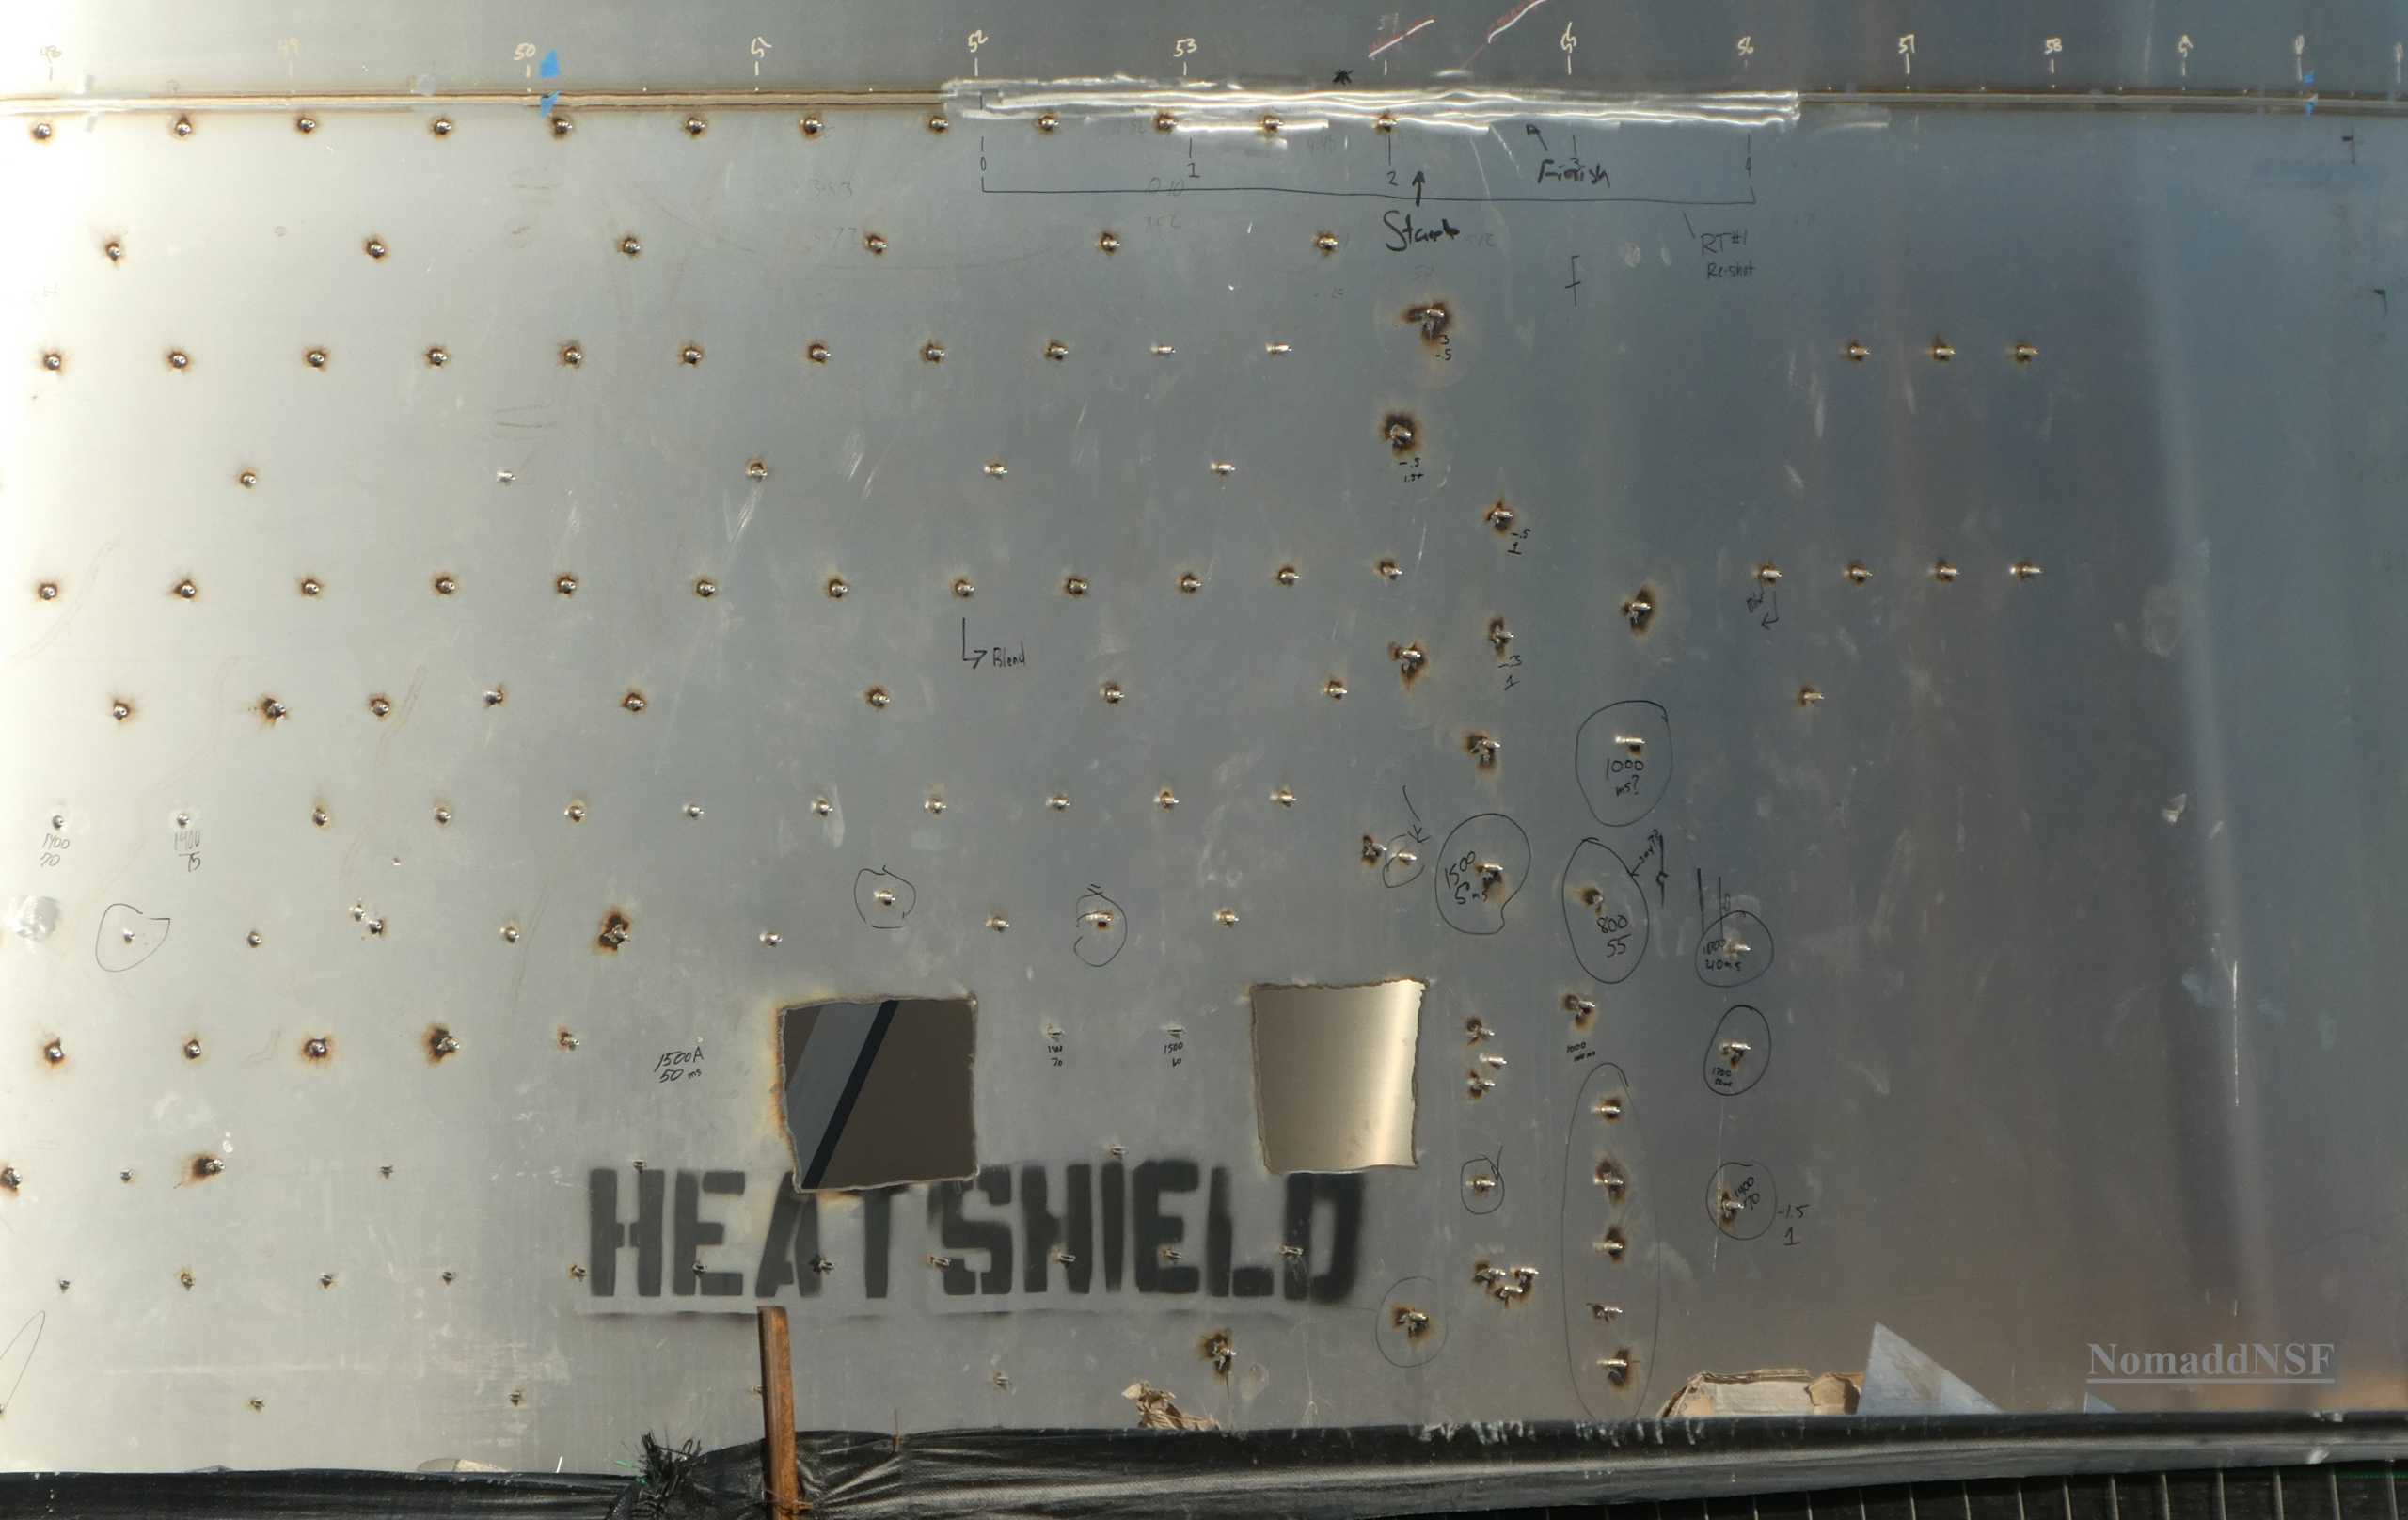 Starship Boca Chica 070920 (NASASpaceflight – Nomadd) heat shield test 2 (c)